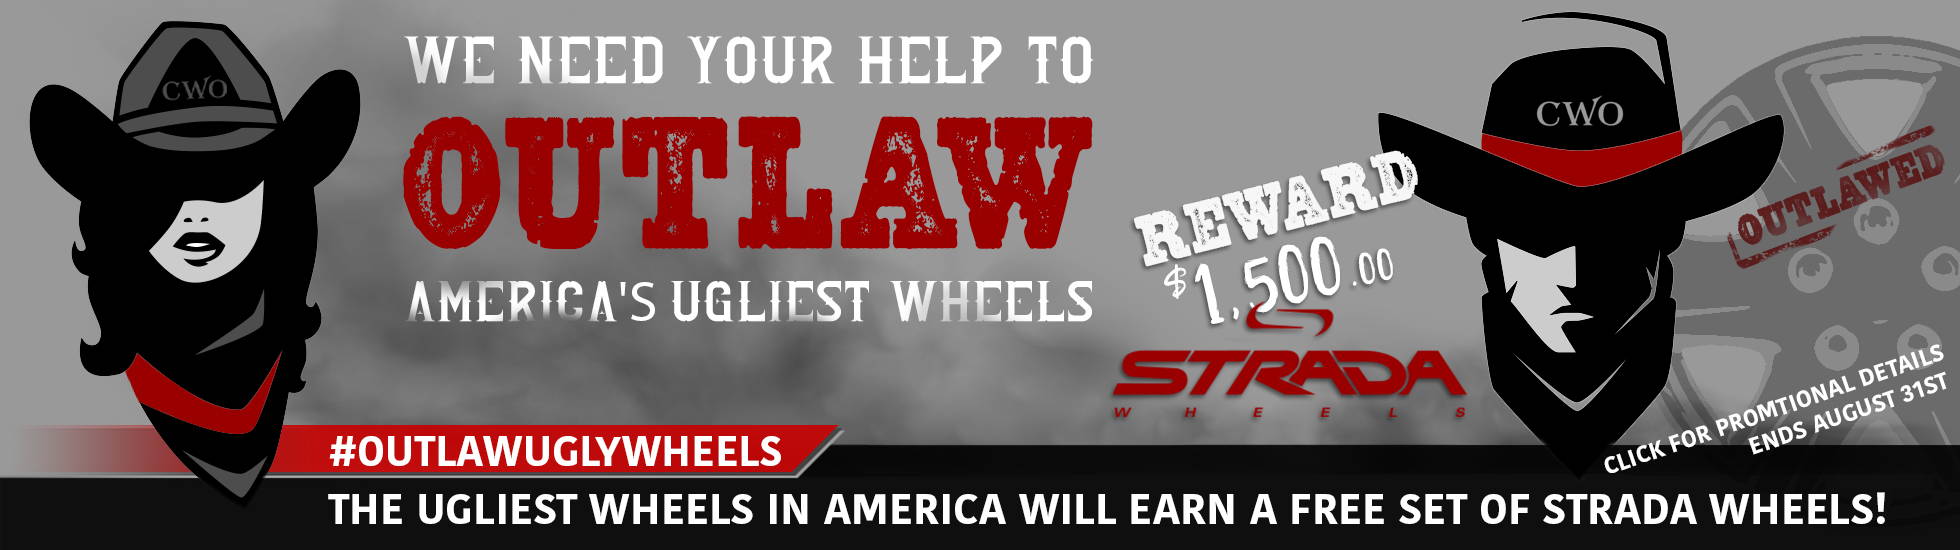 OUTLAW America's Ugliest Wheels Banner